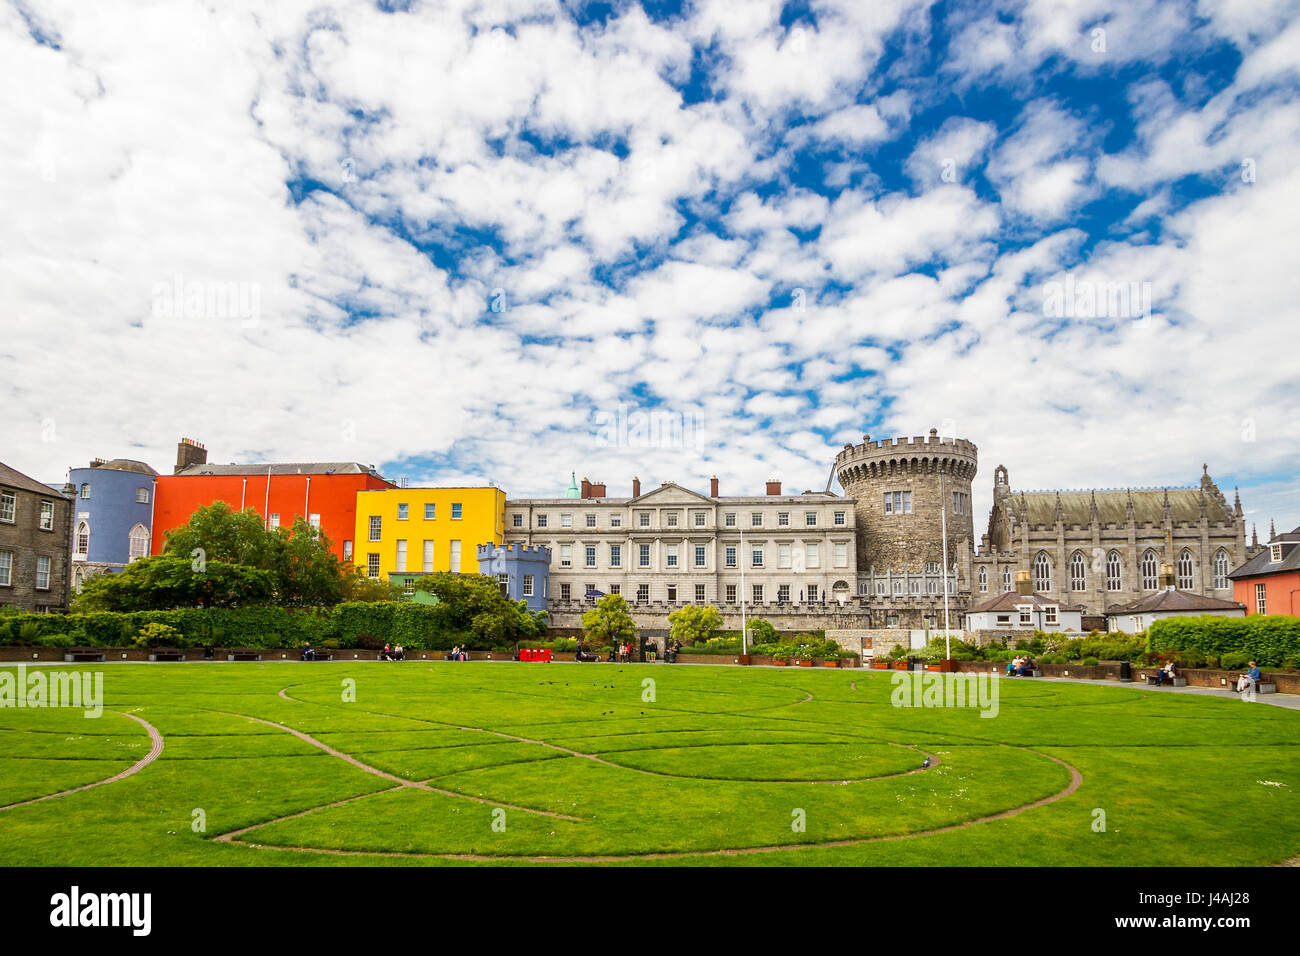 Dublin Castle, Dublin, Irland. Blick über Dubh Linn Gardens Bermingham Turm, staatliche Appartments, achteckigen Turm, Rekord-Turm und Chapel Royal. Stockfoto